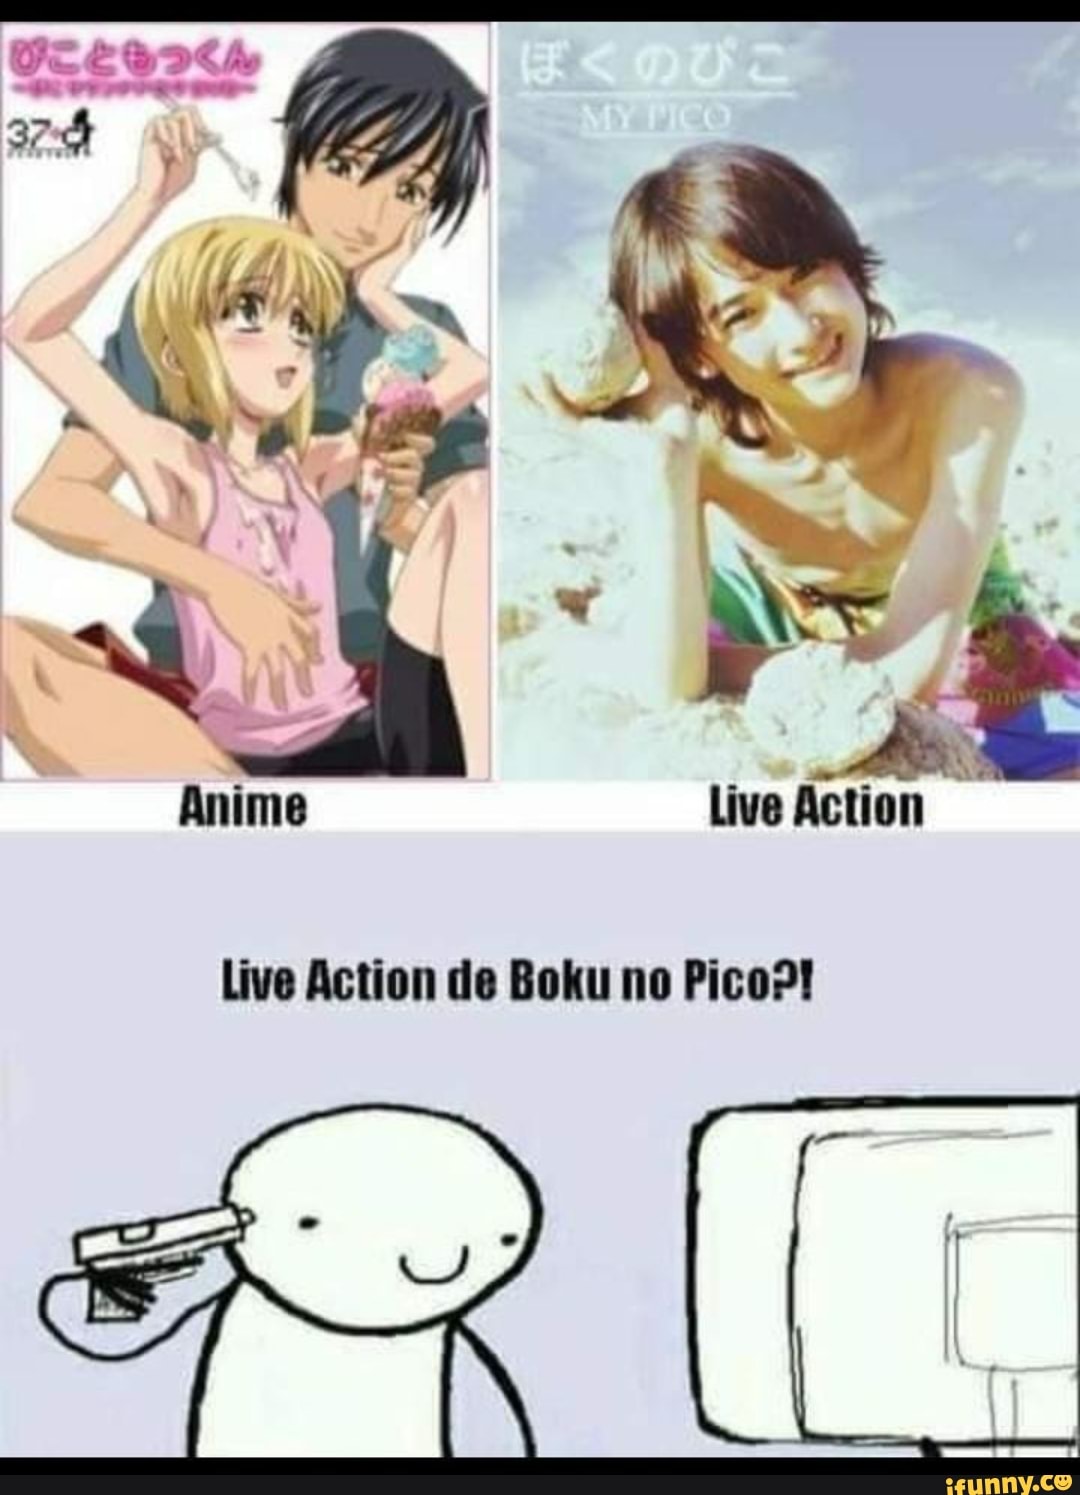 Boku no pico live action confirmed